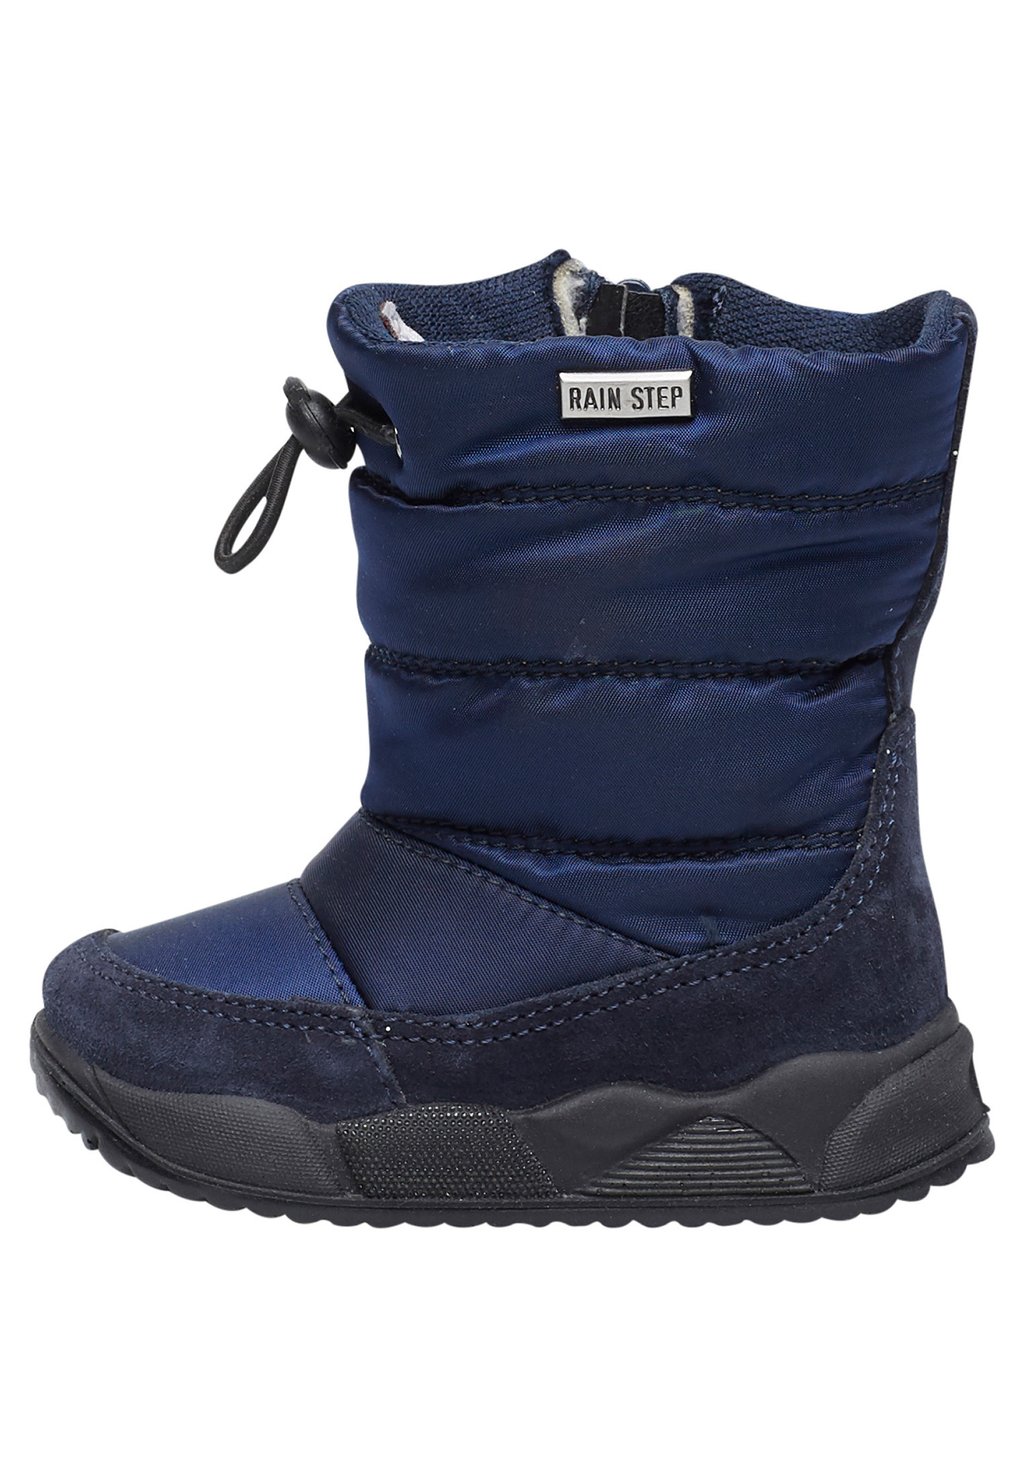 Зимние ботинки/зимние ботинки POZNURR Falcotto, цвет blau